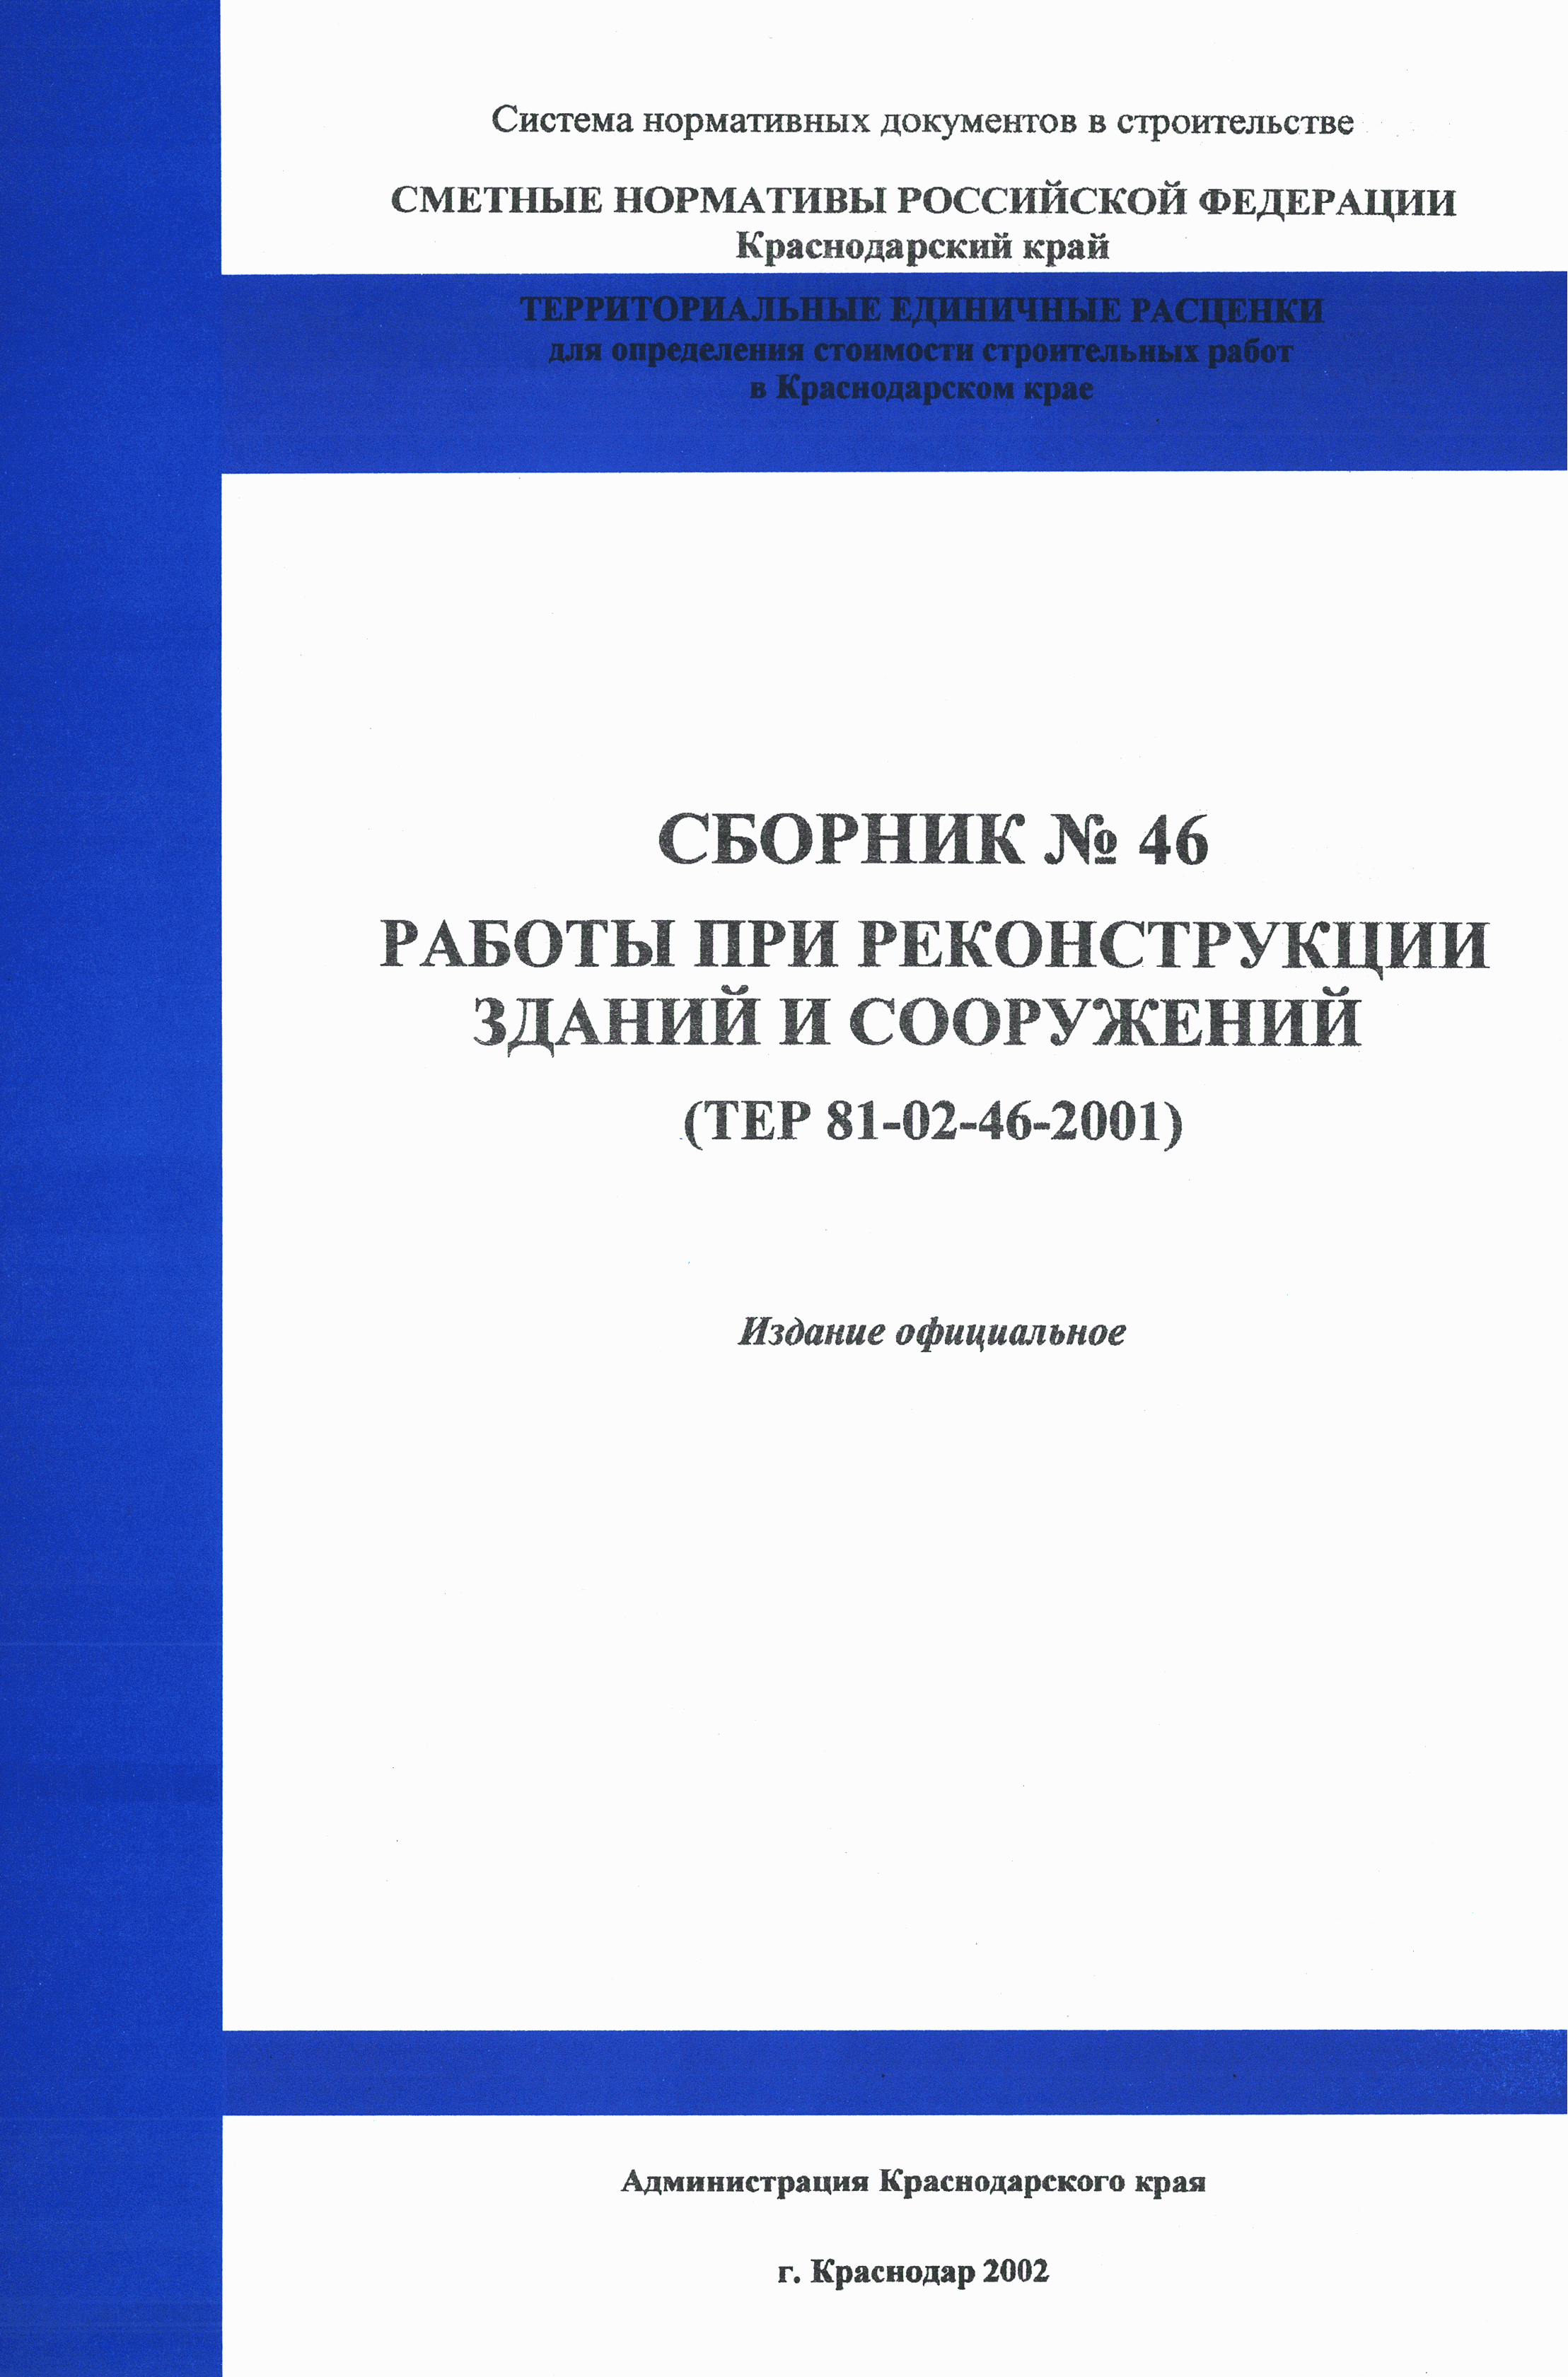 ТЕР Краснодарского края 2001-46